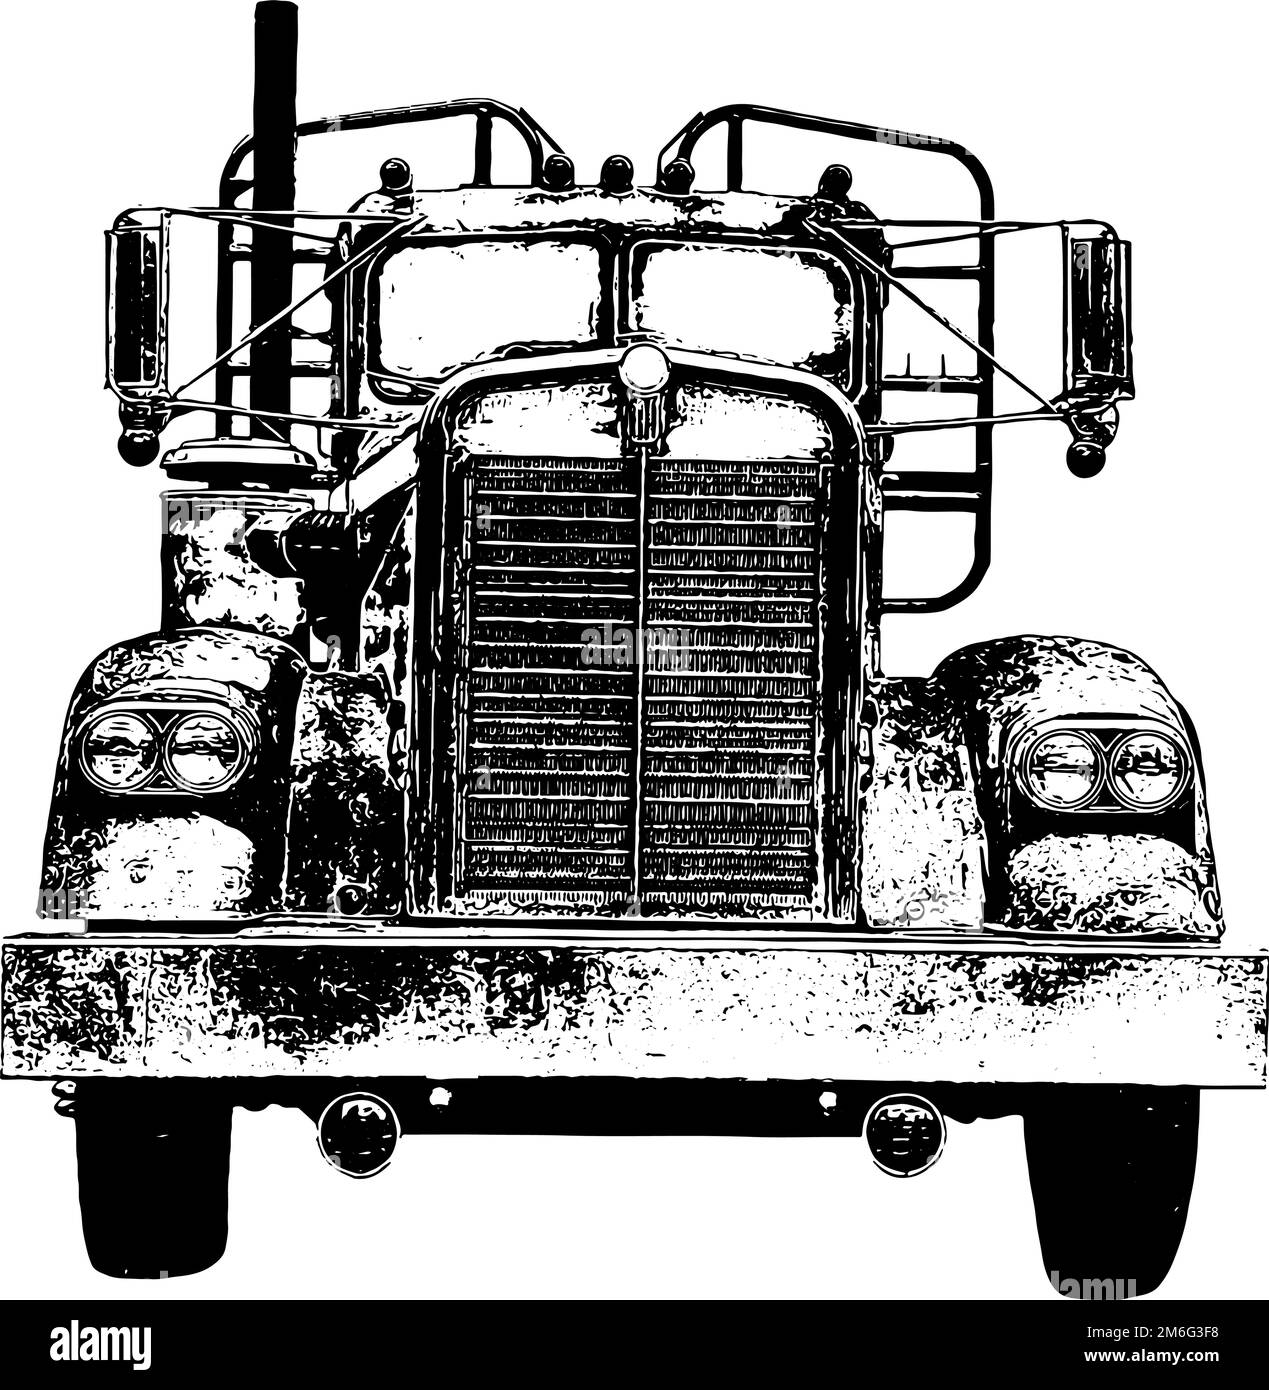 18 wheeler semi truck illustration Stock Vector